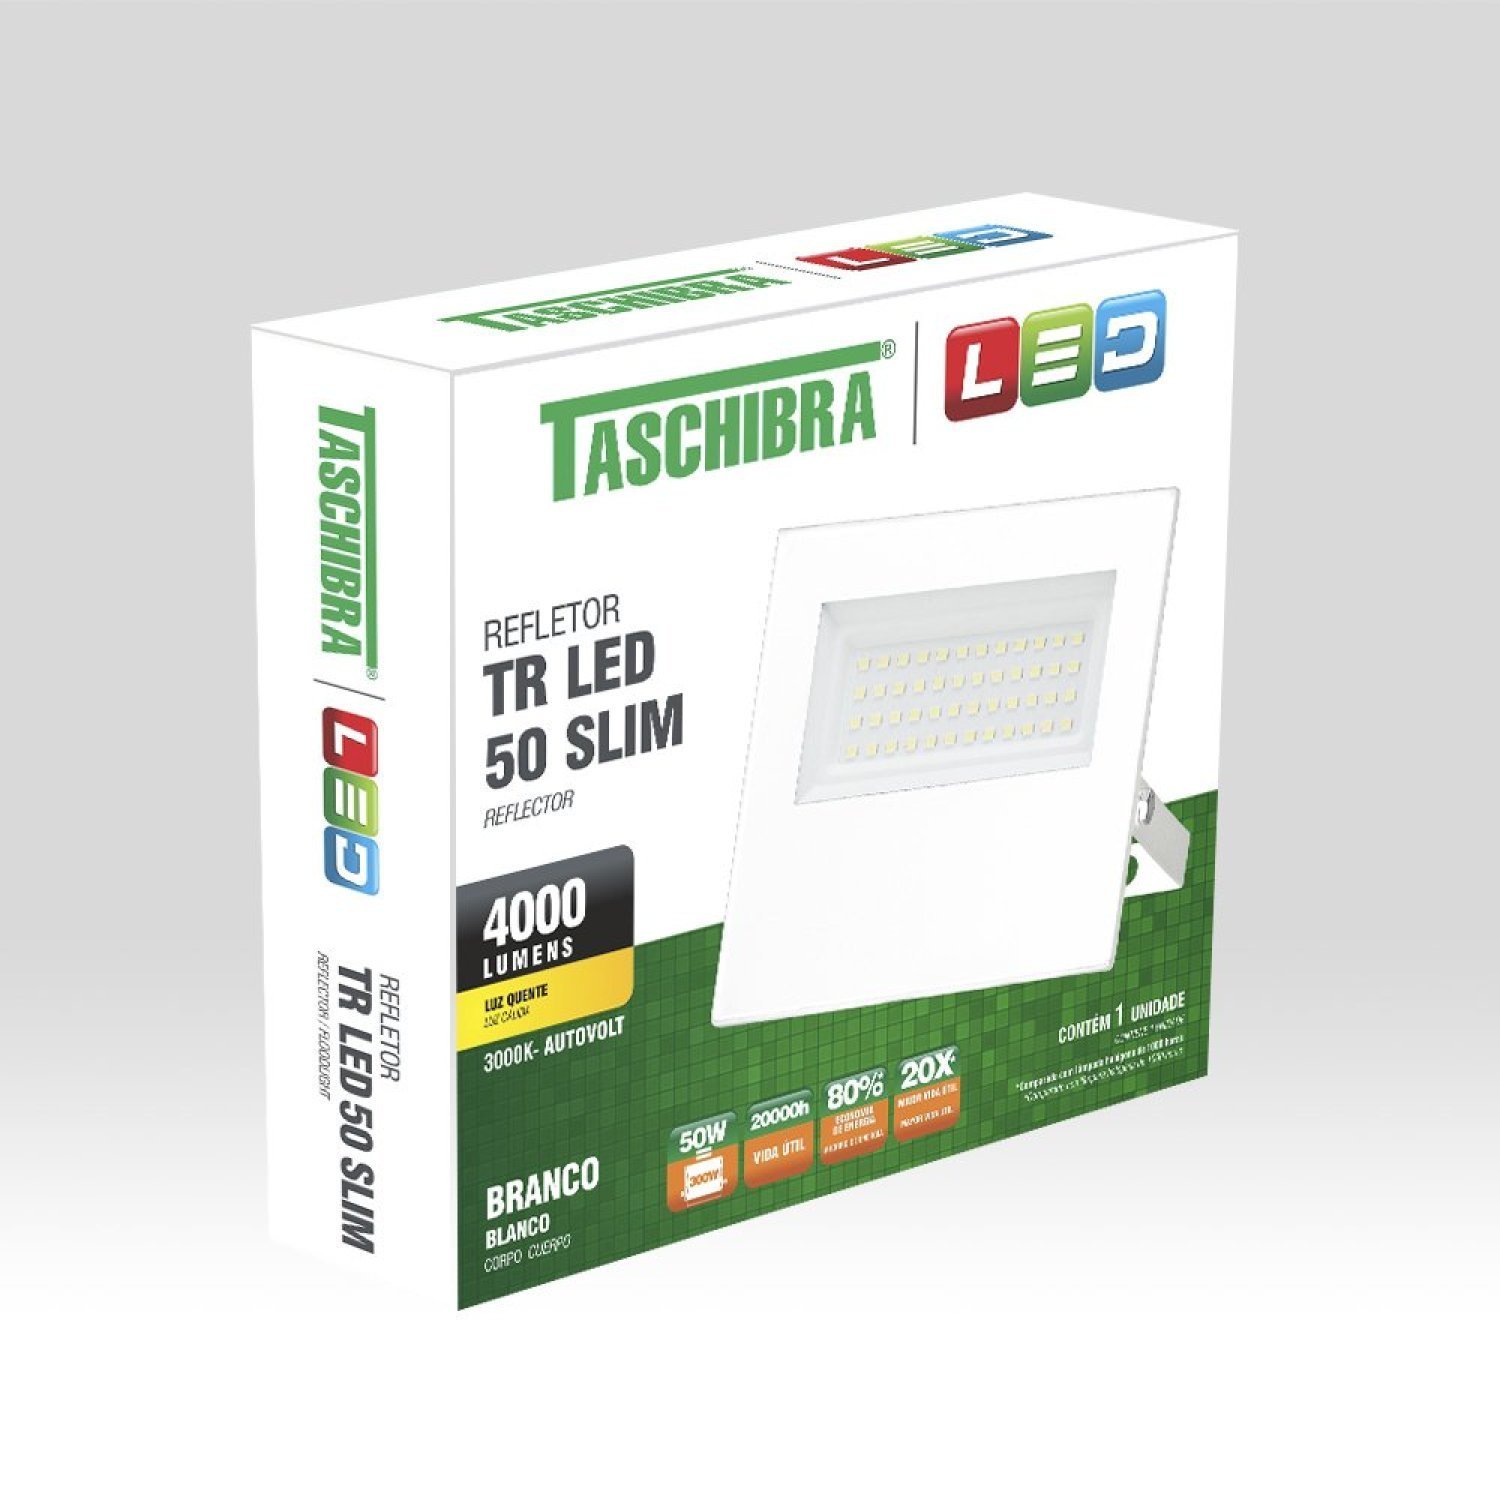 Refletor LED 50W TR Slim 3000k Luz Amarela Bivolt Branco IP65 Taschibra - 2